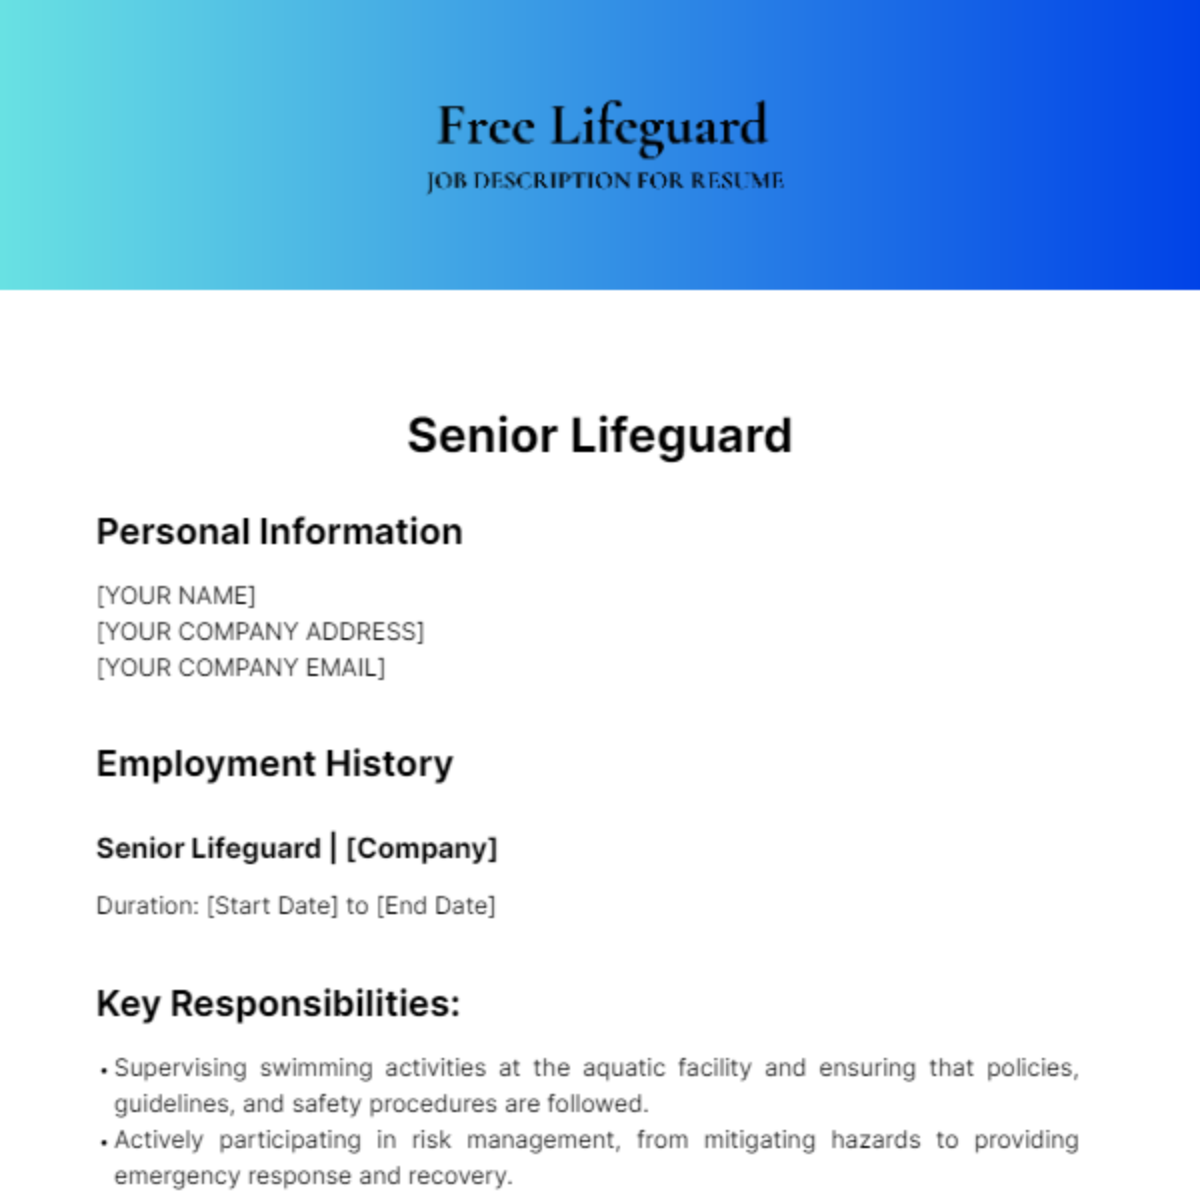 Free Lifeguard Job Description for Resume Template